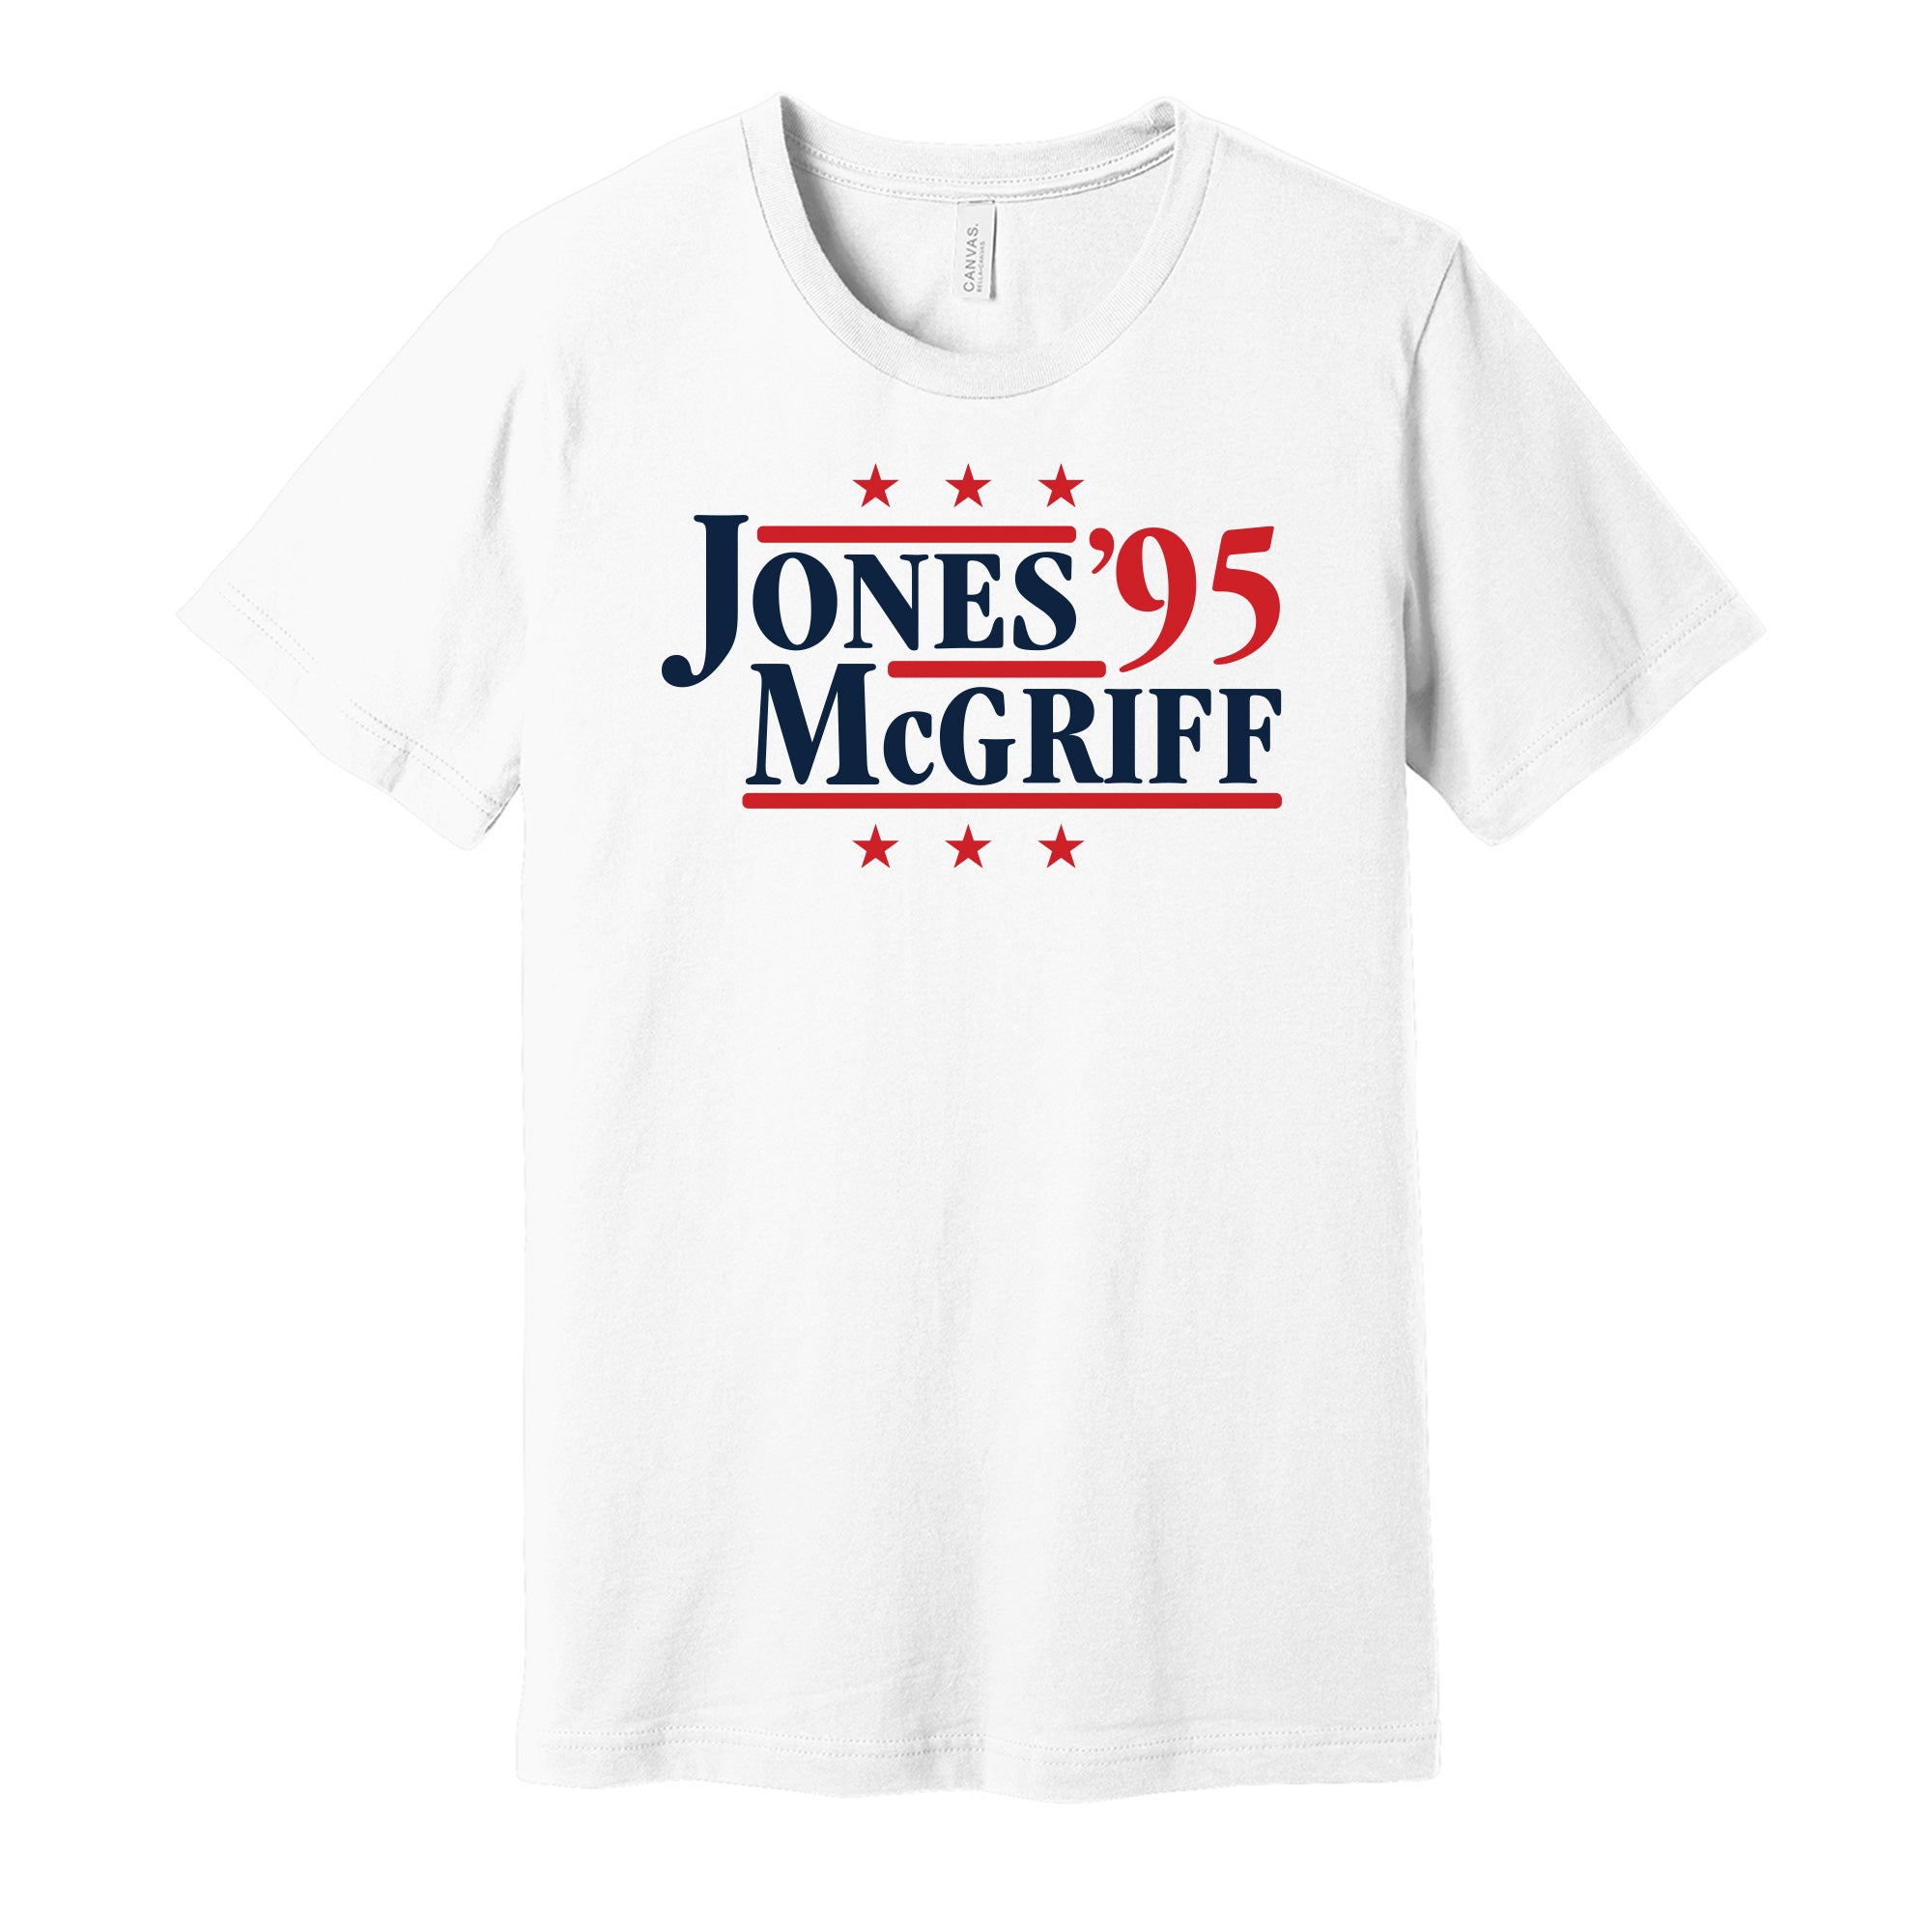 Chipper Jones T-Shirts for Sale